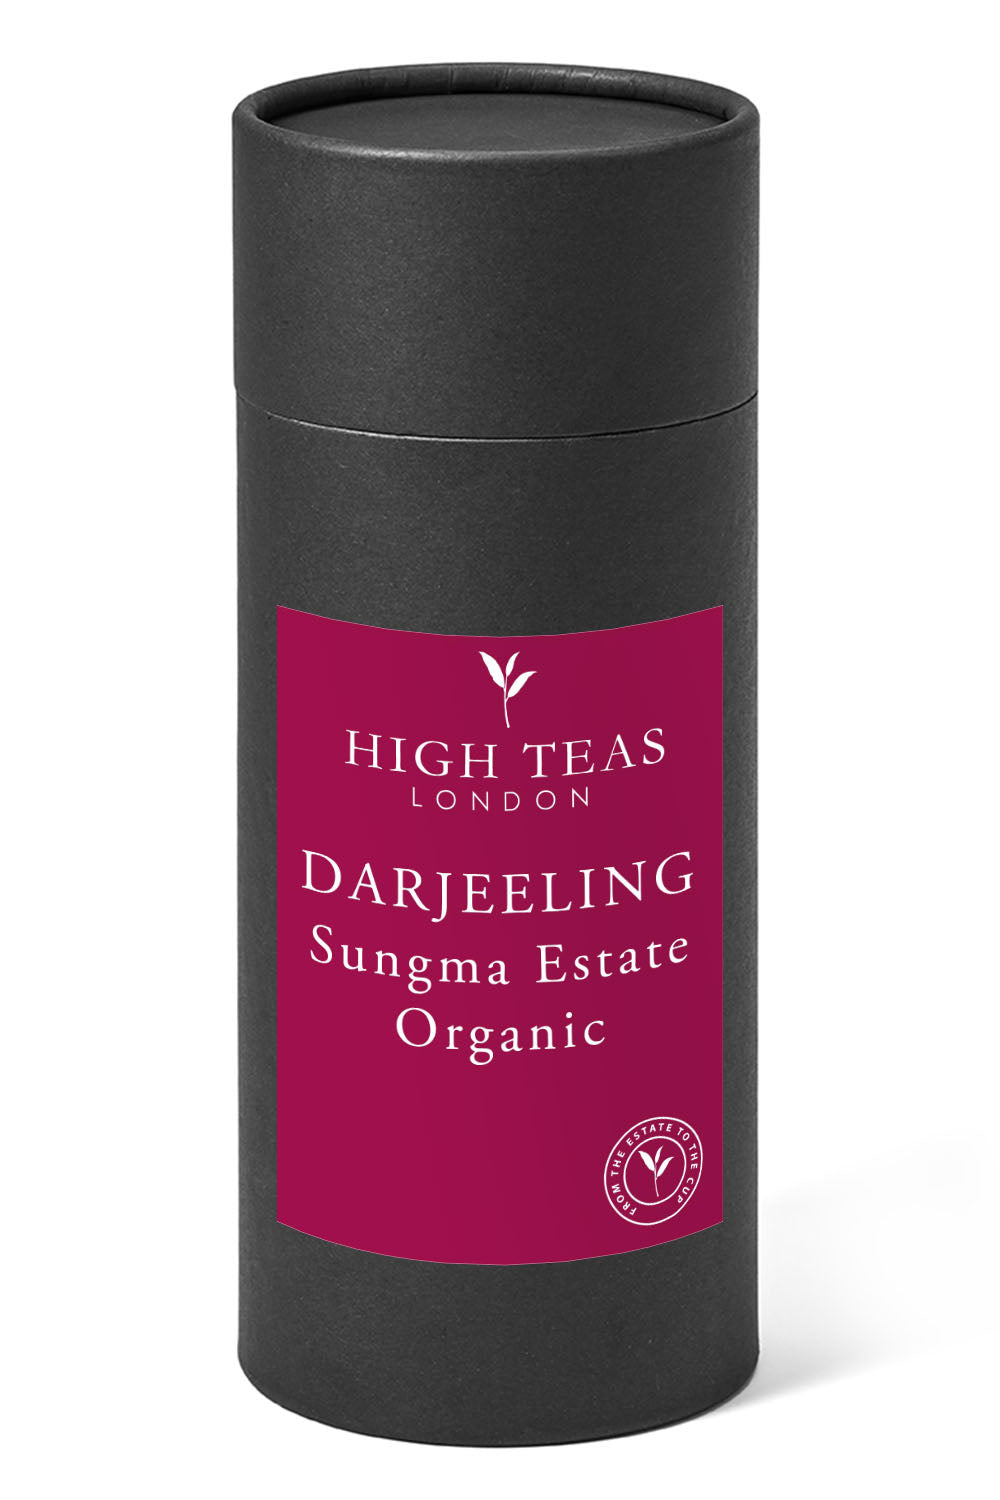 Darjeeling BPS Sungma Estate Organic-150g gift-Loose Leaf Tea-High Teas